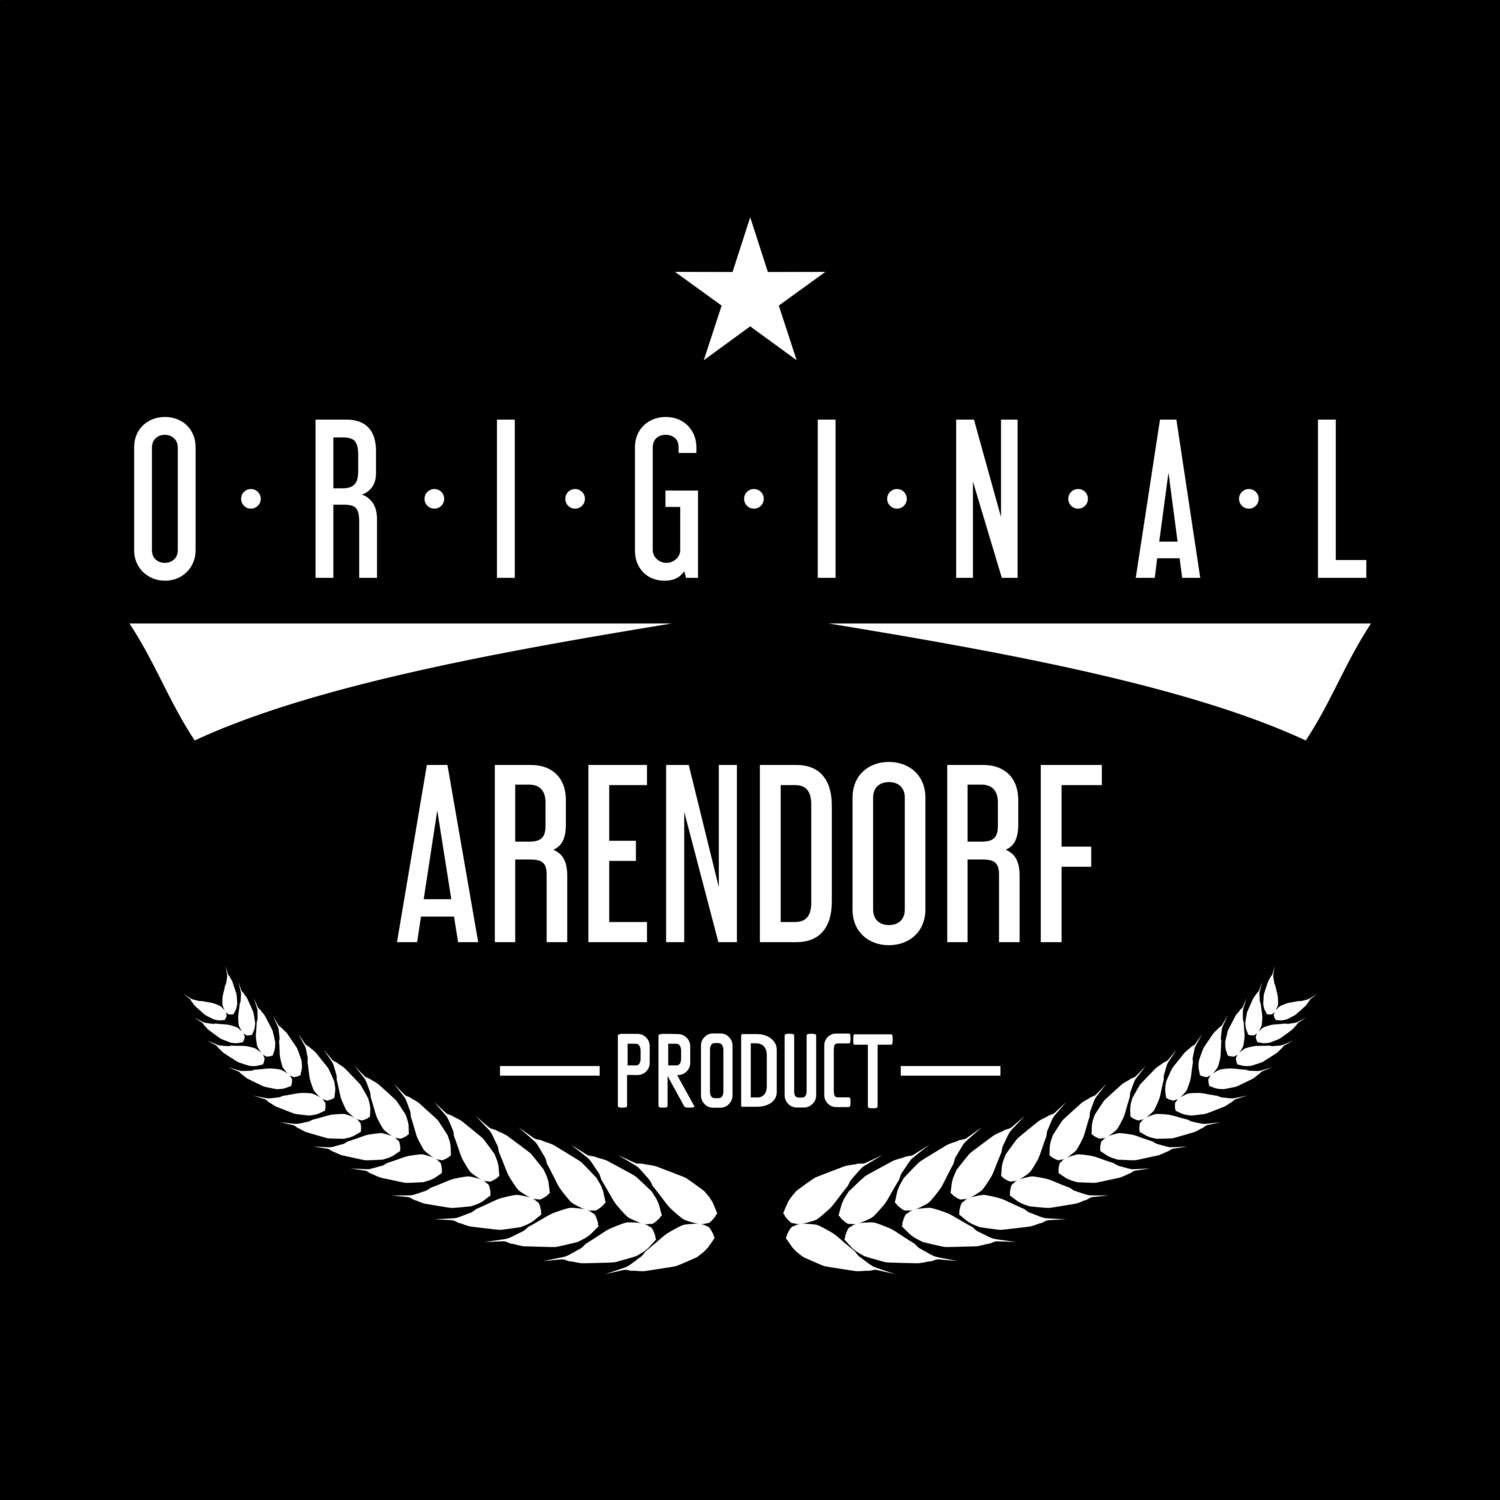 Arendorf T-Shirt »Original Product«